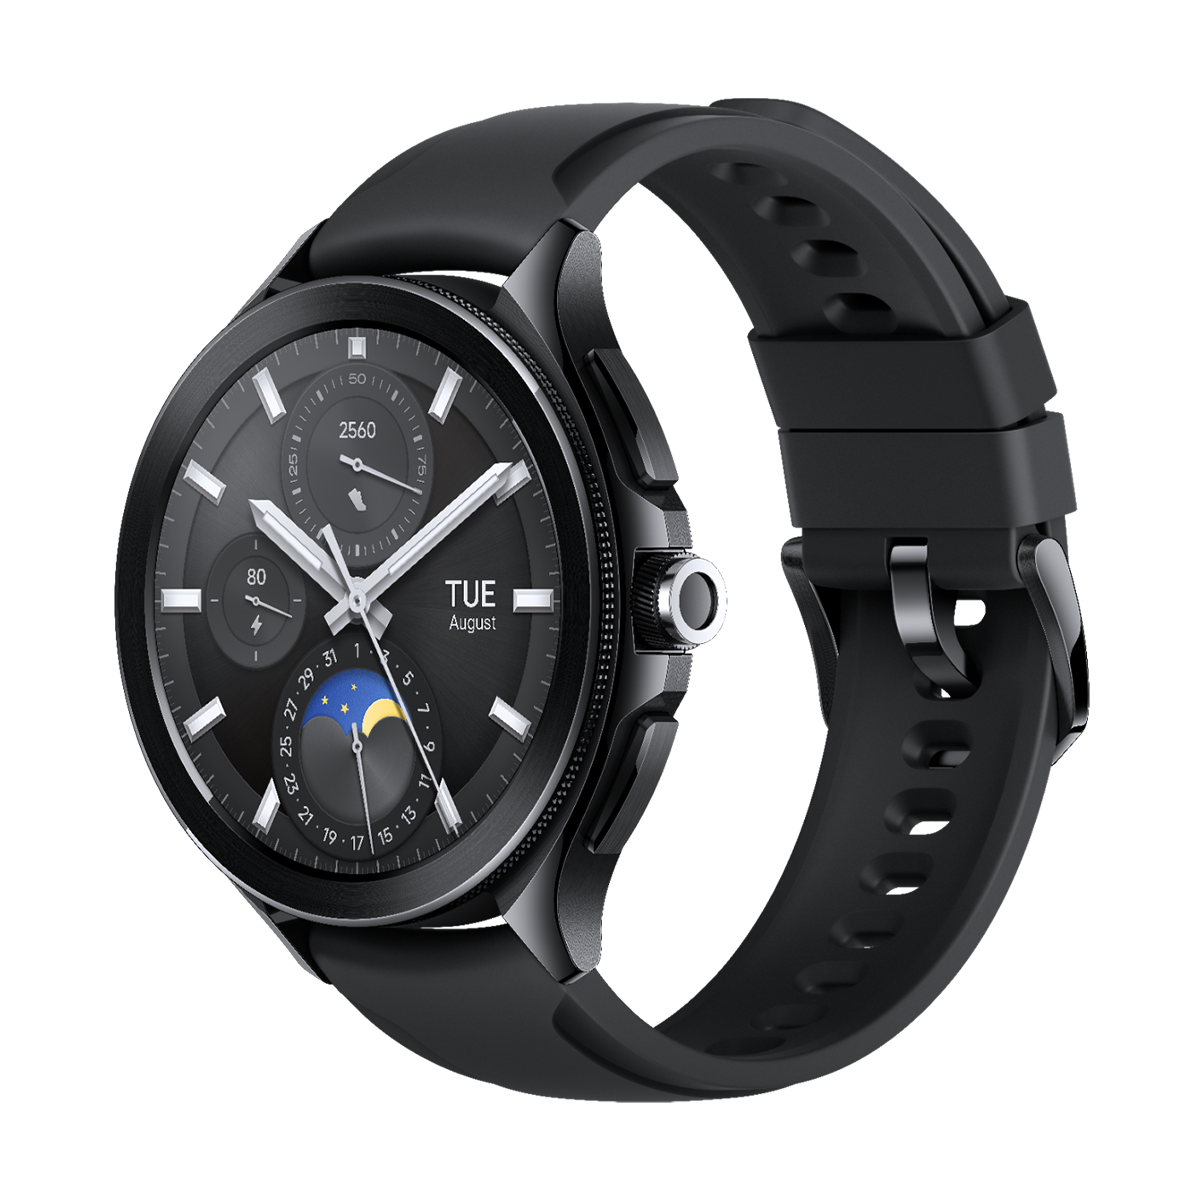 Fotografie Smartwatch Xiaomi Watch 2 Pro, Bluetooth Black Case, Black Fluororubber Strap